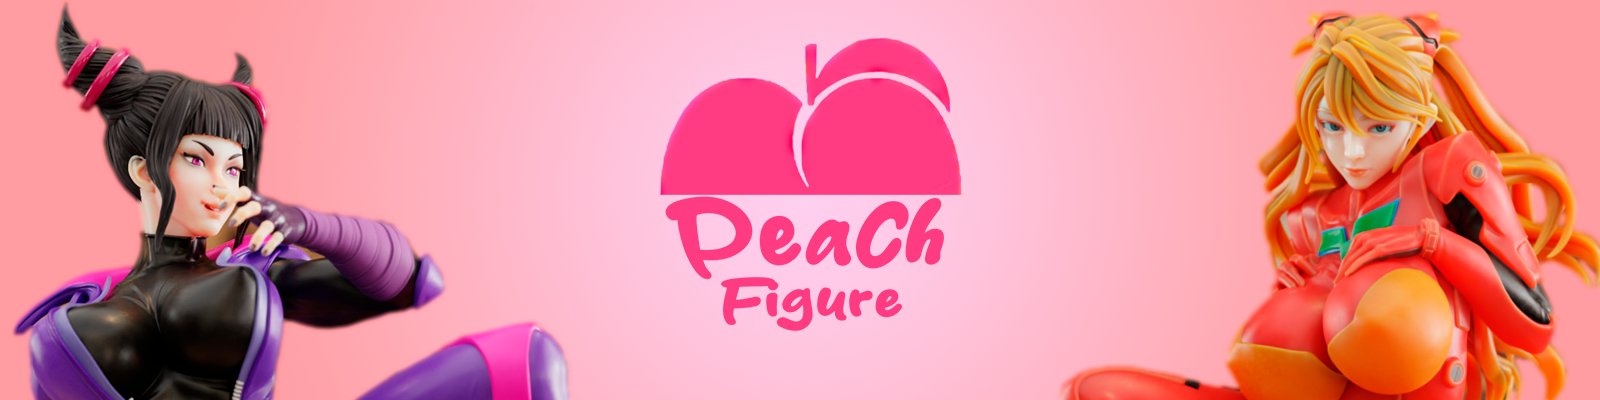 PeachFigure